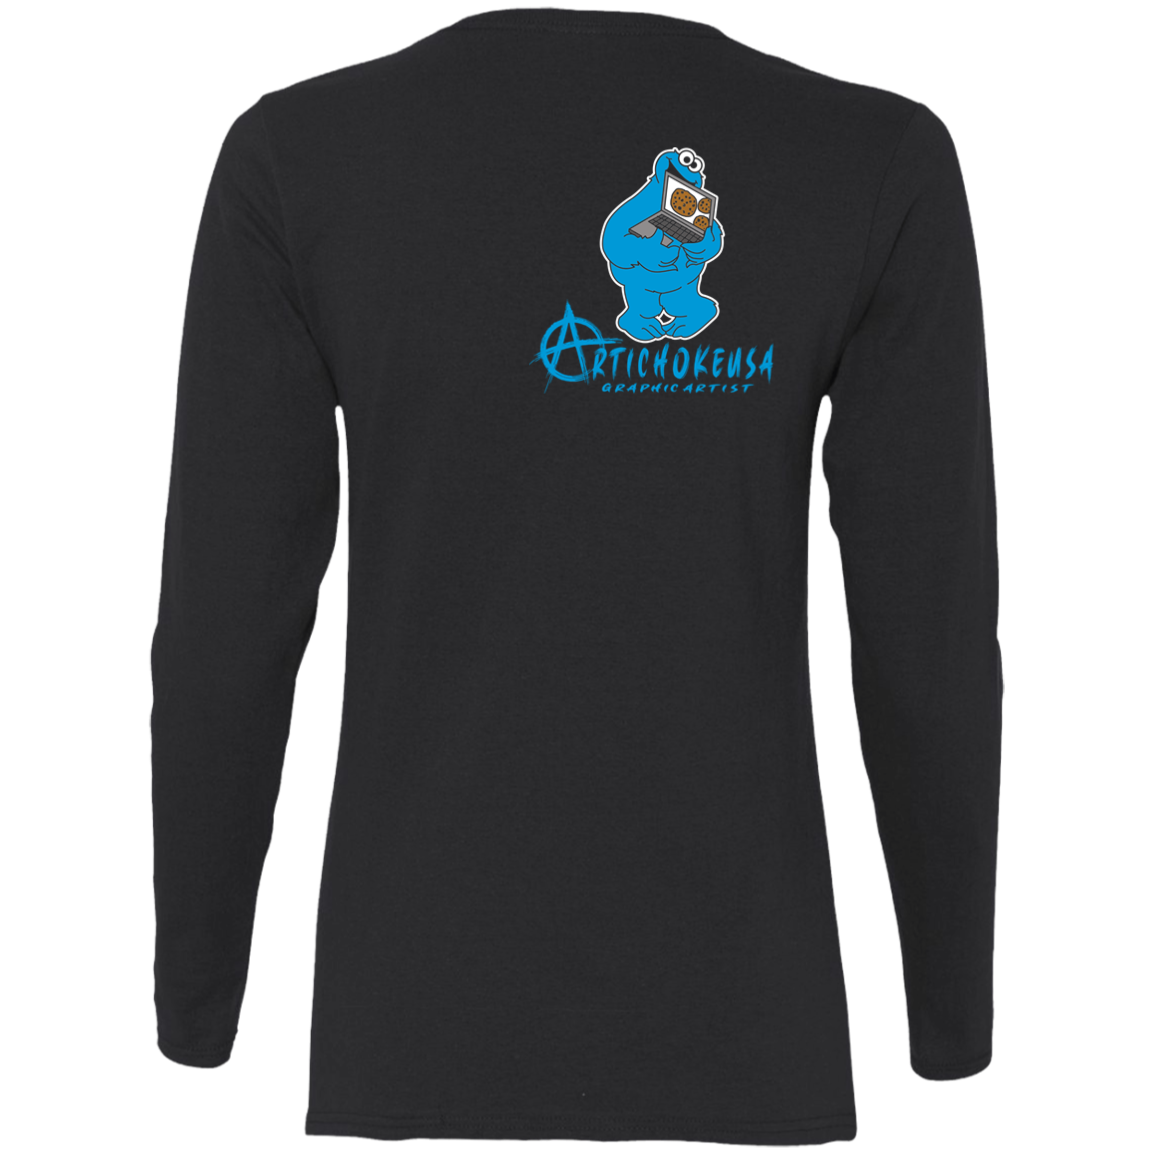 ArtichokeUSA Custom Design #55. DelEATing Cookes. IT humor. Cookie Monster Parody. Ladies' 100% Cotton Long Sleeve T-Shirt